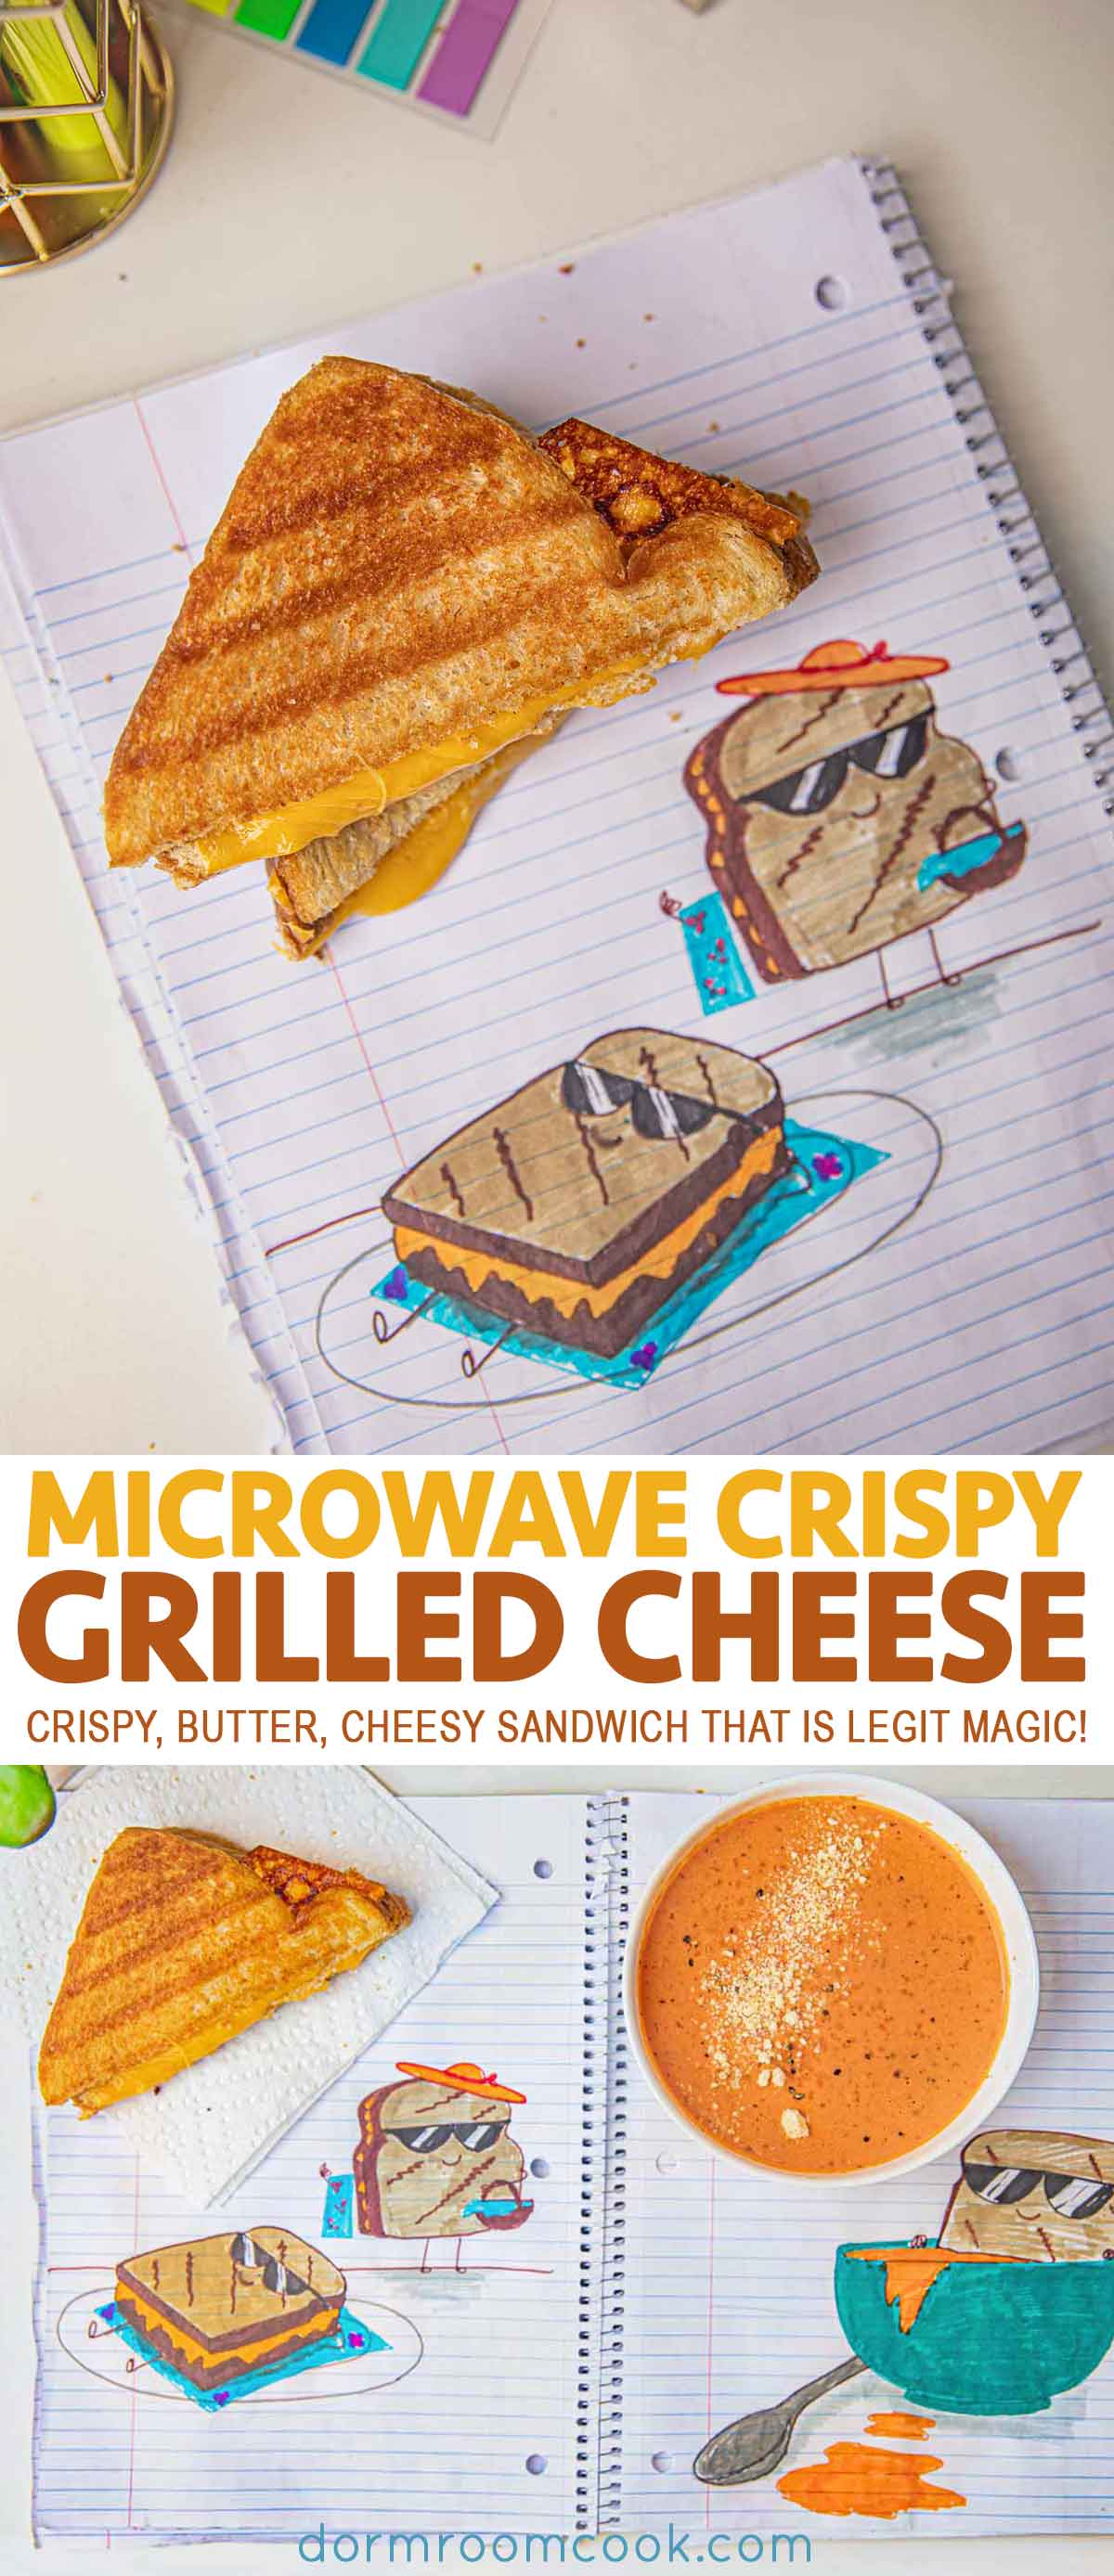 https://dormroomcook.com/wp-content/uploads/2019/09/Microwave-Crispy-Grilled-Cheese-L.jpg